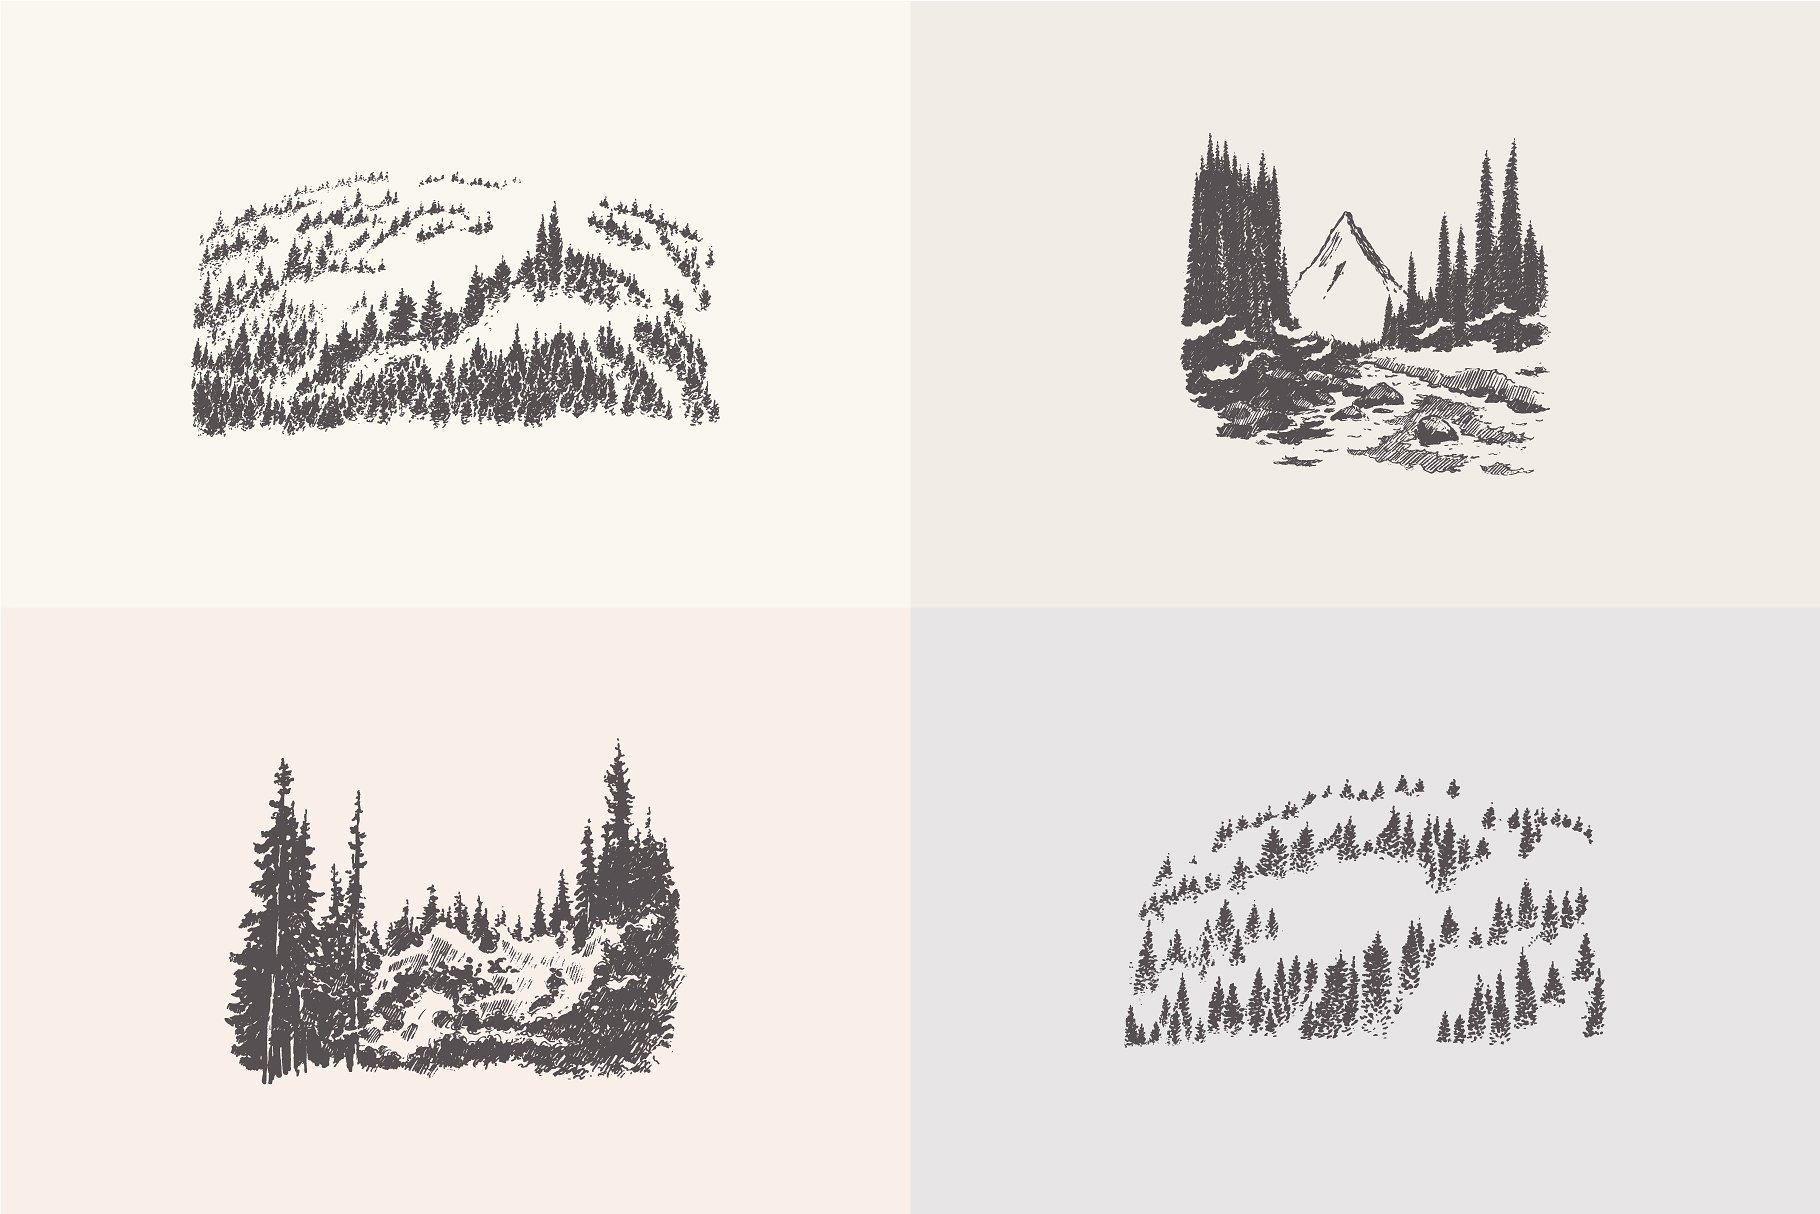 素描森林景观作品插画合集 Collection of forest landscapes插图